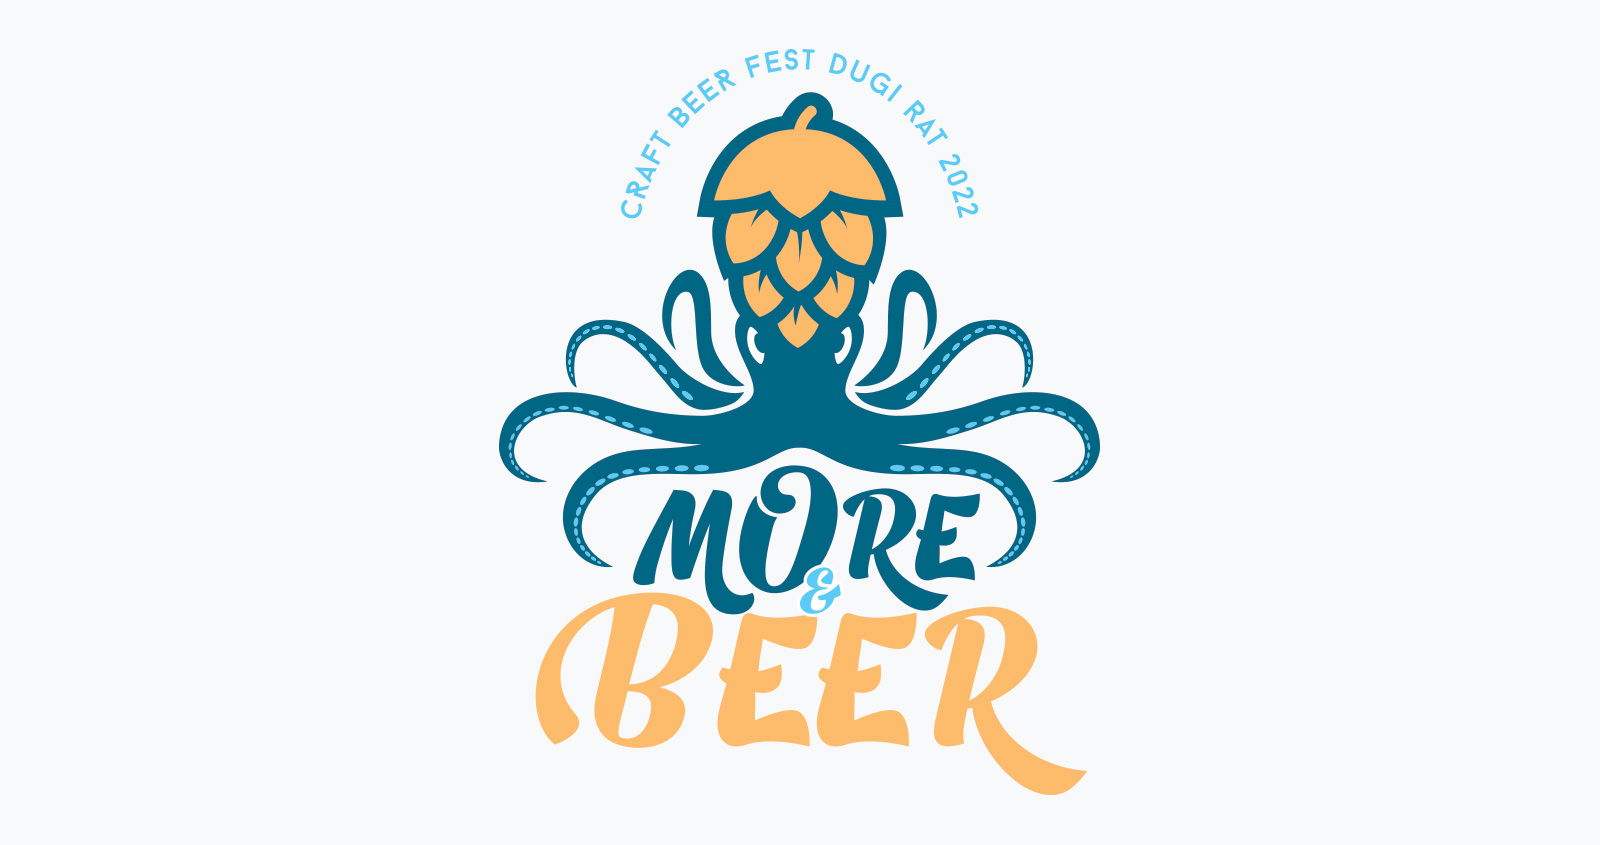 More & Beer craft festival